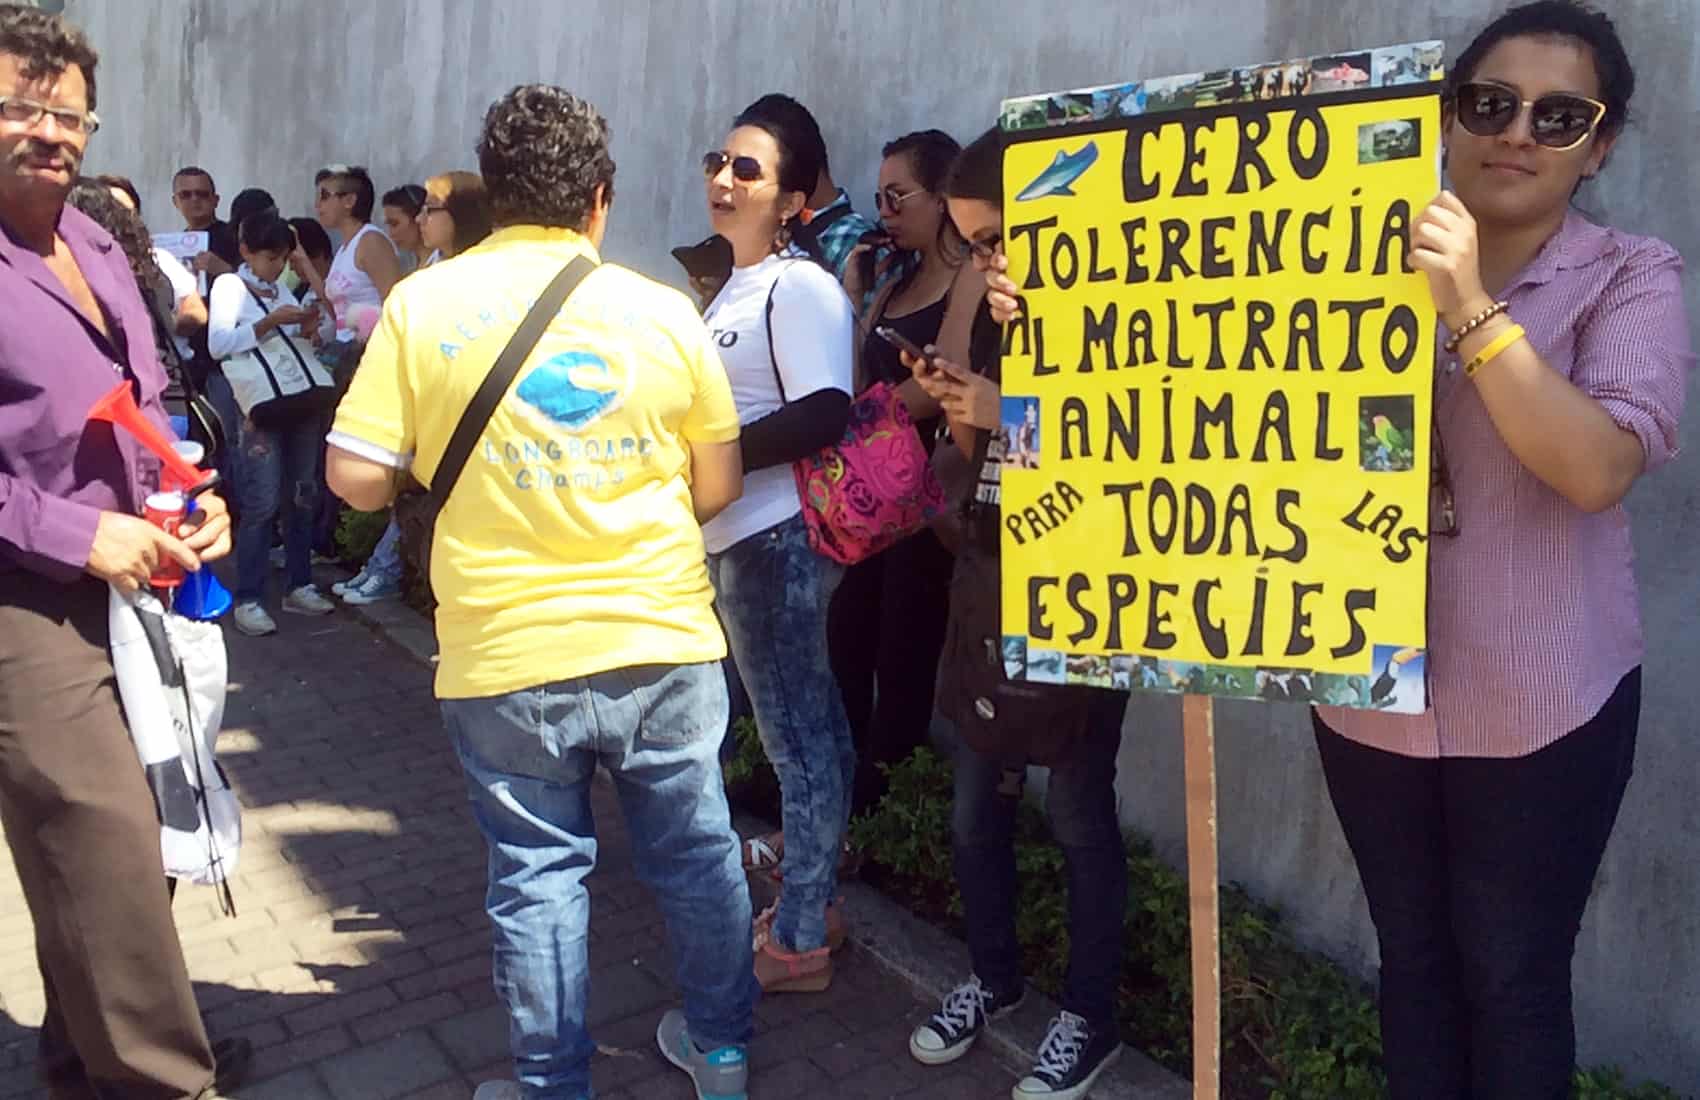 Protesters call for a bill to fight animal cruelty in Costa Rica